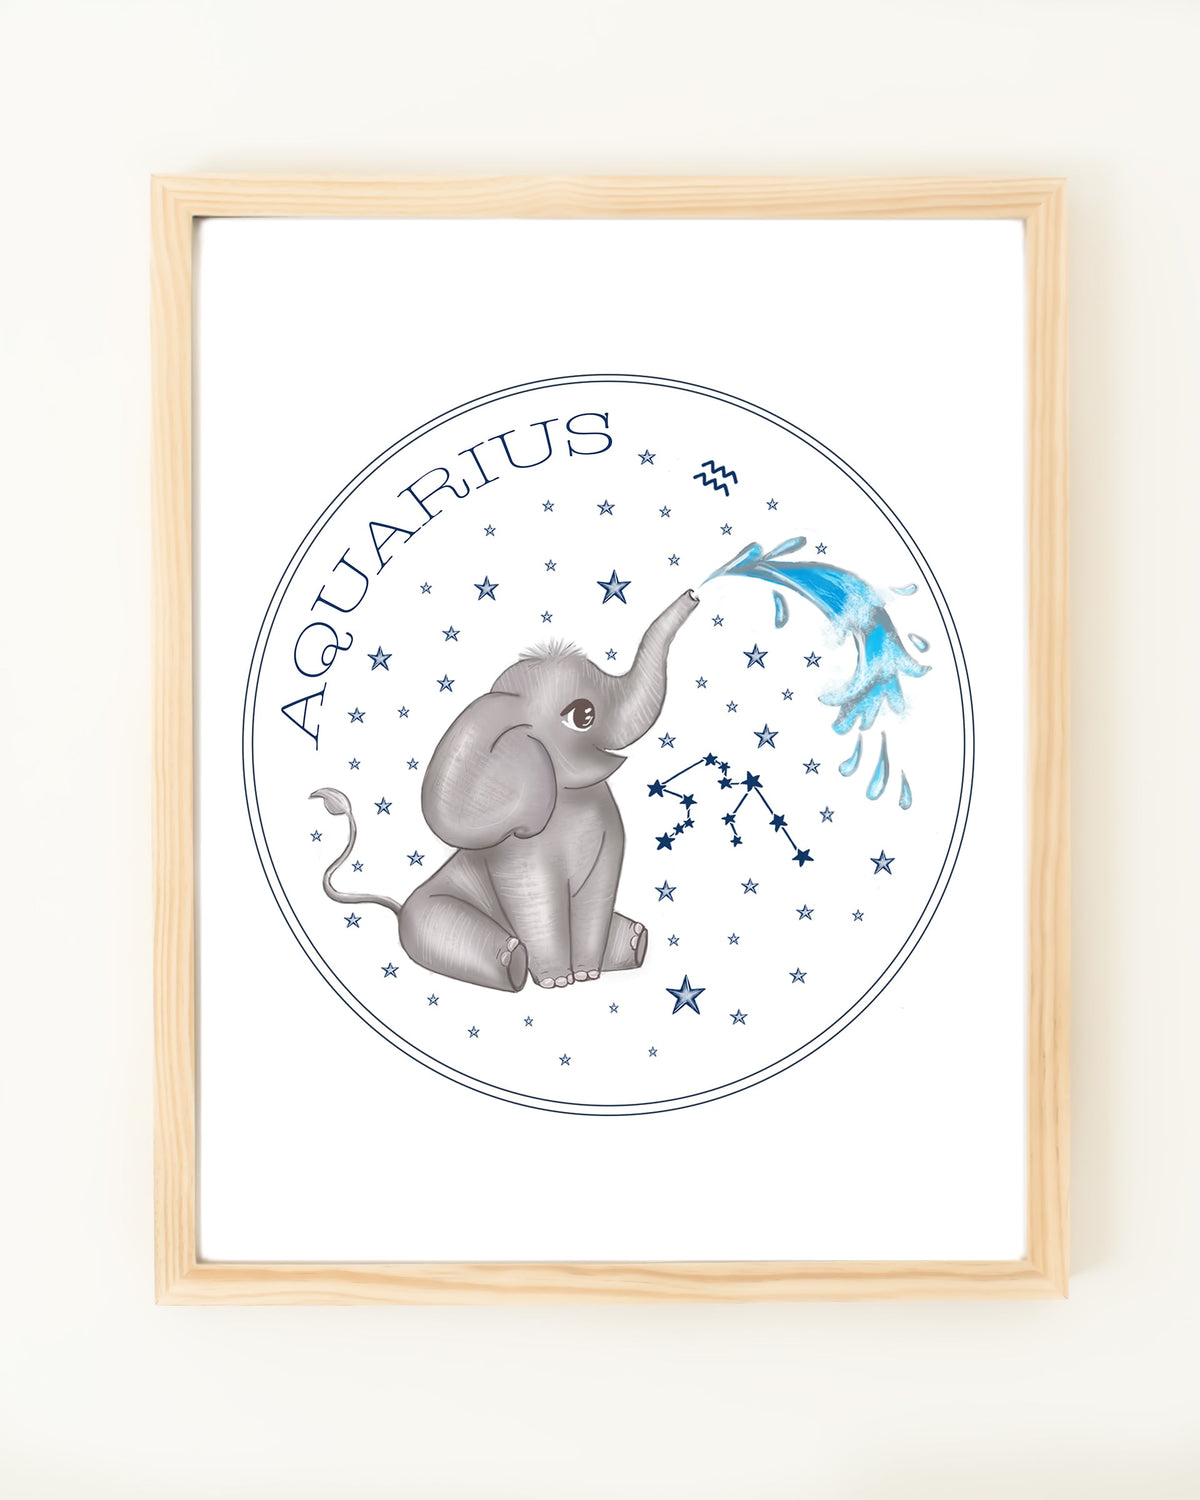 Framed hand drawn stars zodiac nursery decor wall art poster Aquarius cute baby elephant with water